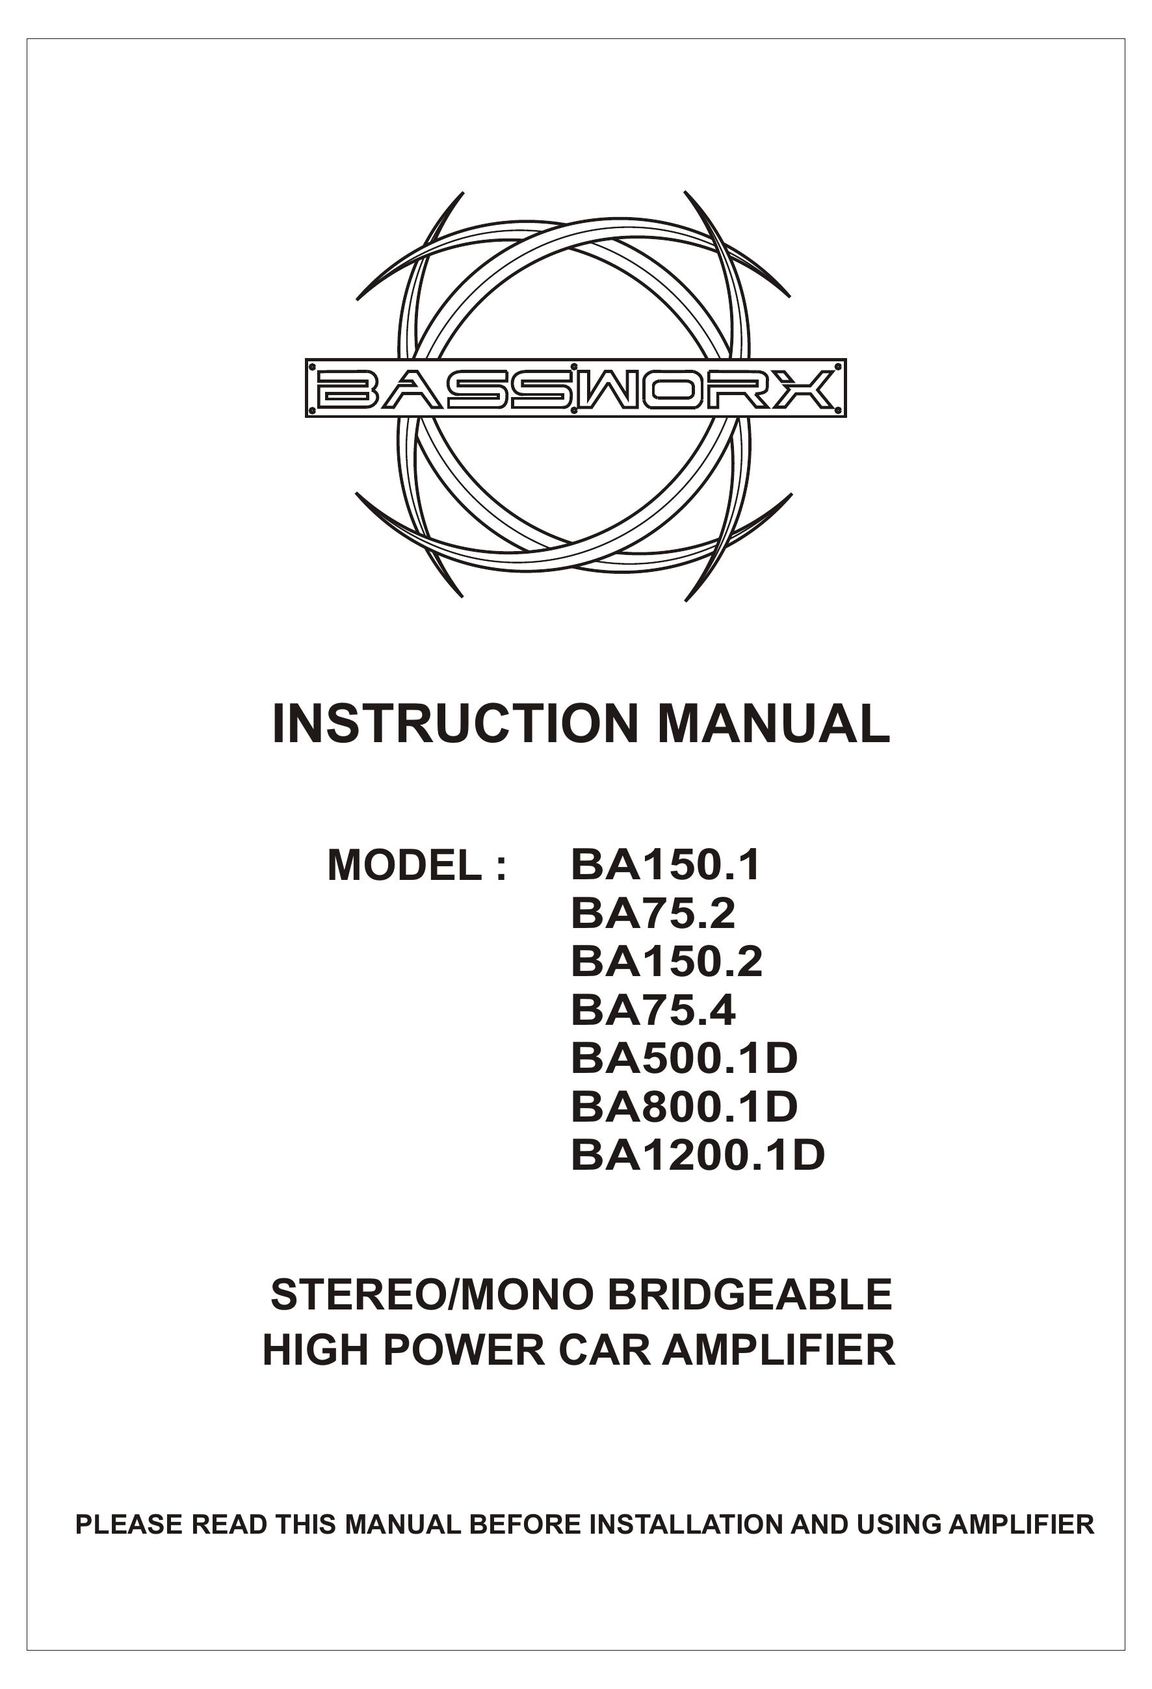 Bassworx BA150.2 Car Amplifier User Manual